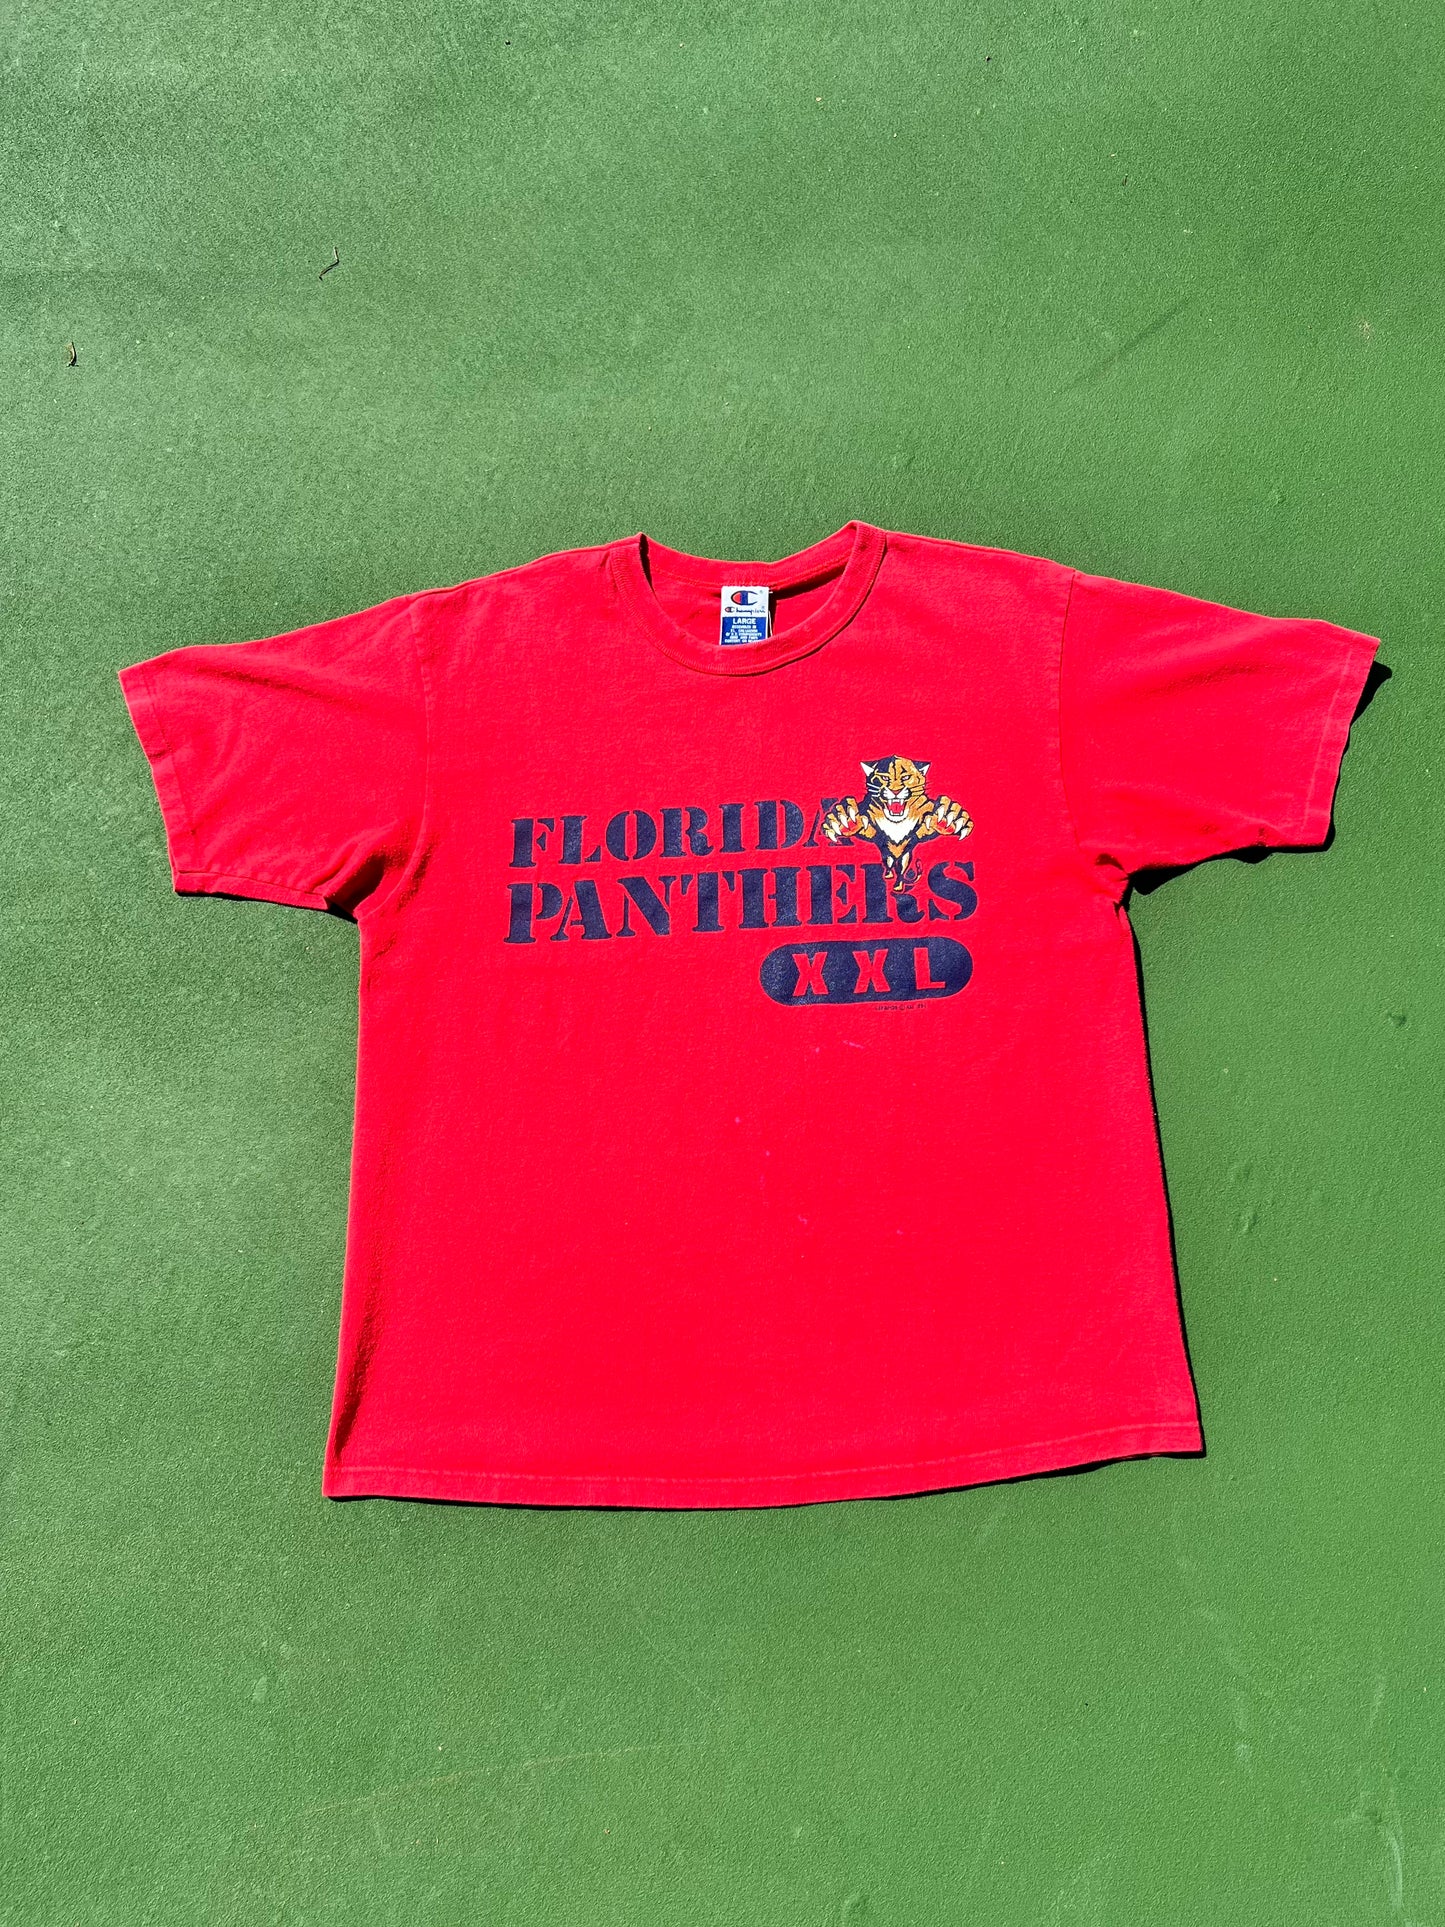 Vintage 1994 Florida Panther Tee Shirt